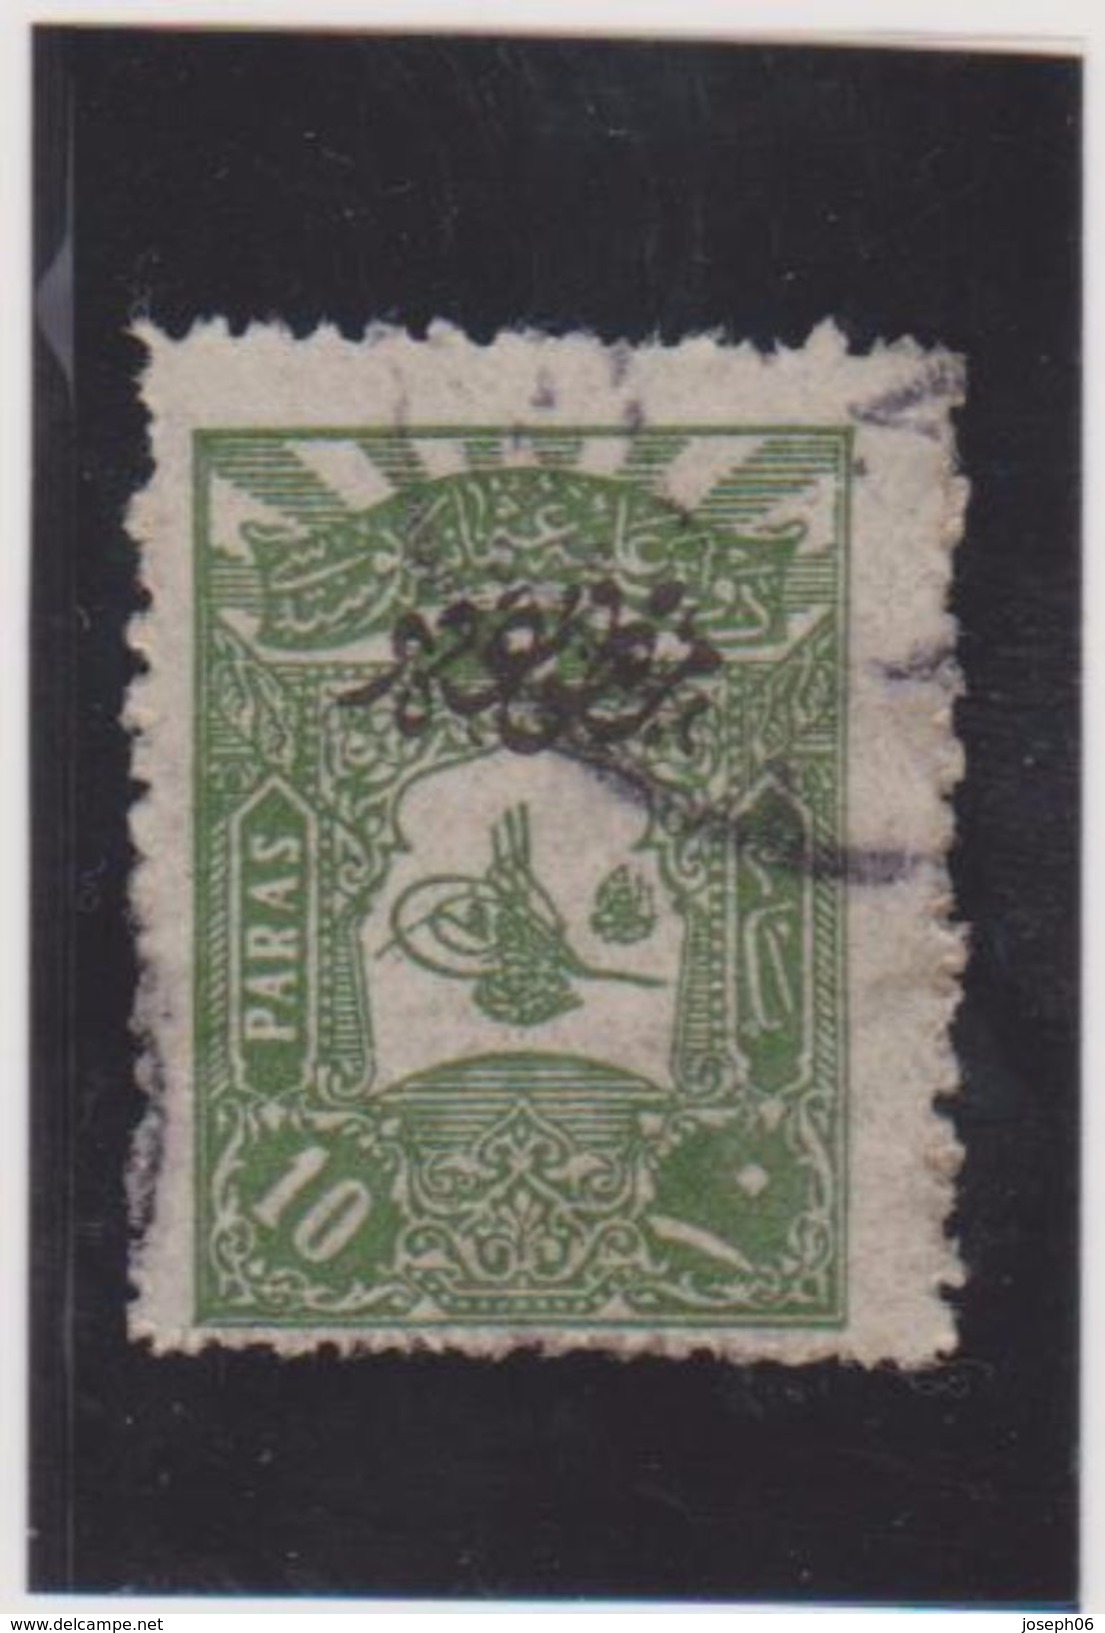 TURQUIE   1905  Journaux  Y.T. N° 29  à  34  Incomplet  Oblitéré - Newspaper Stamps